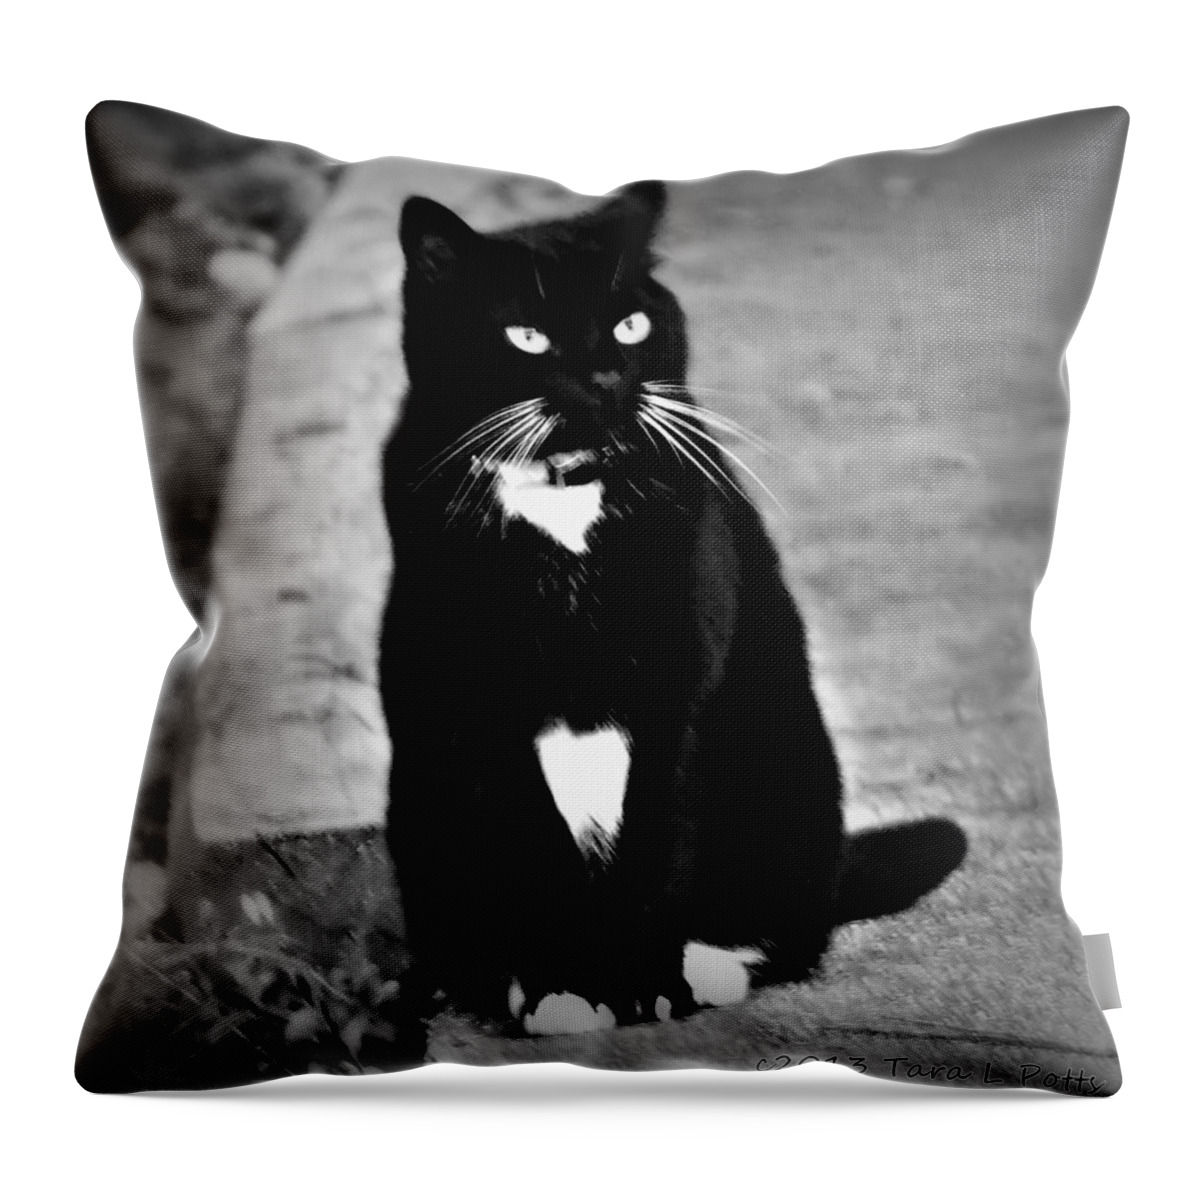 Tuxedo Throw Pillow featuring the photograph Tuxedo Cat by Tara Potts